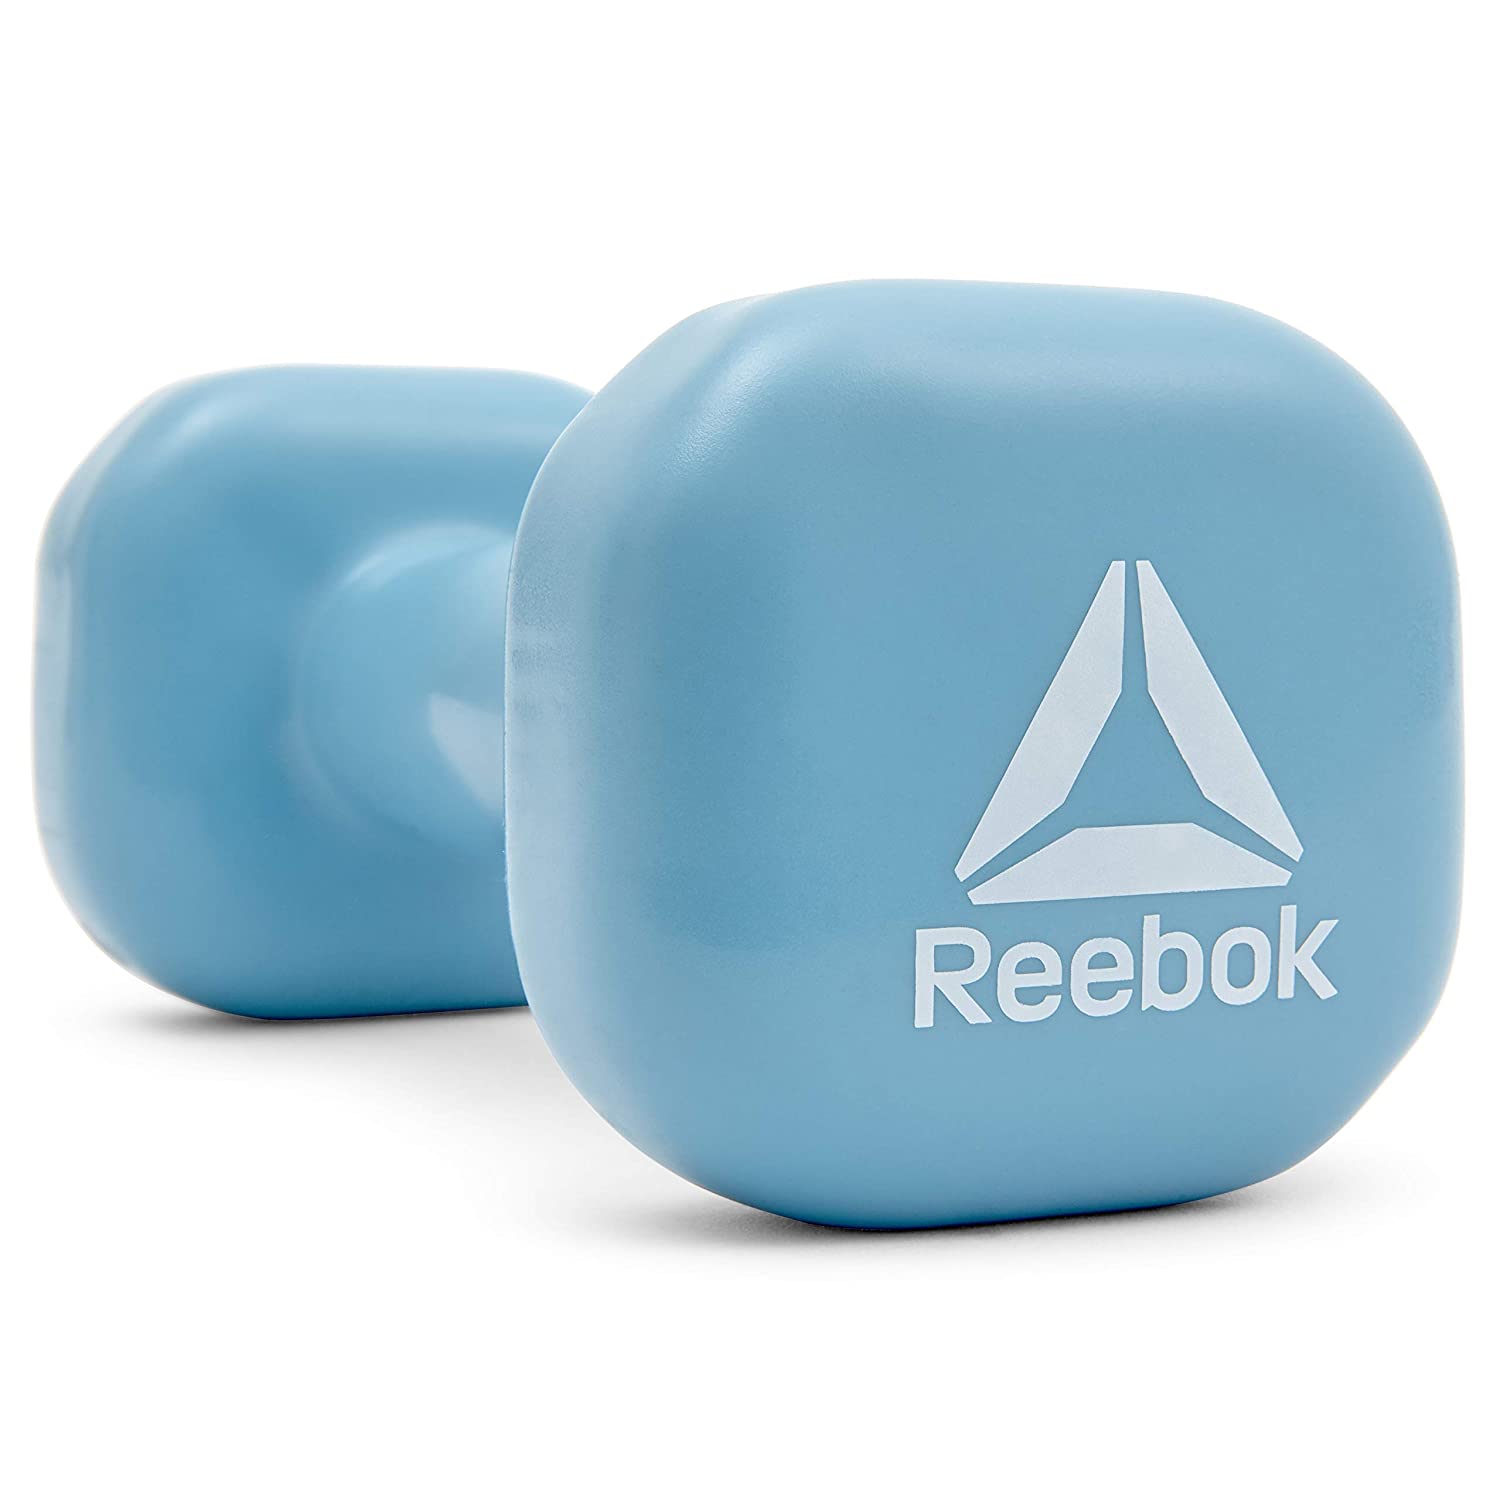 Reebok Unisex Dumbbells, Blue - 2 KG (Single Piece) - Best Price online Prokicksports.com